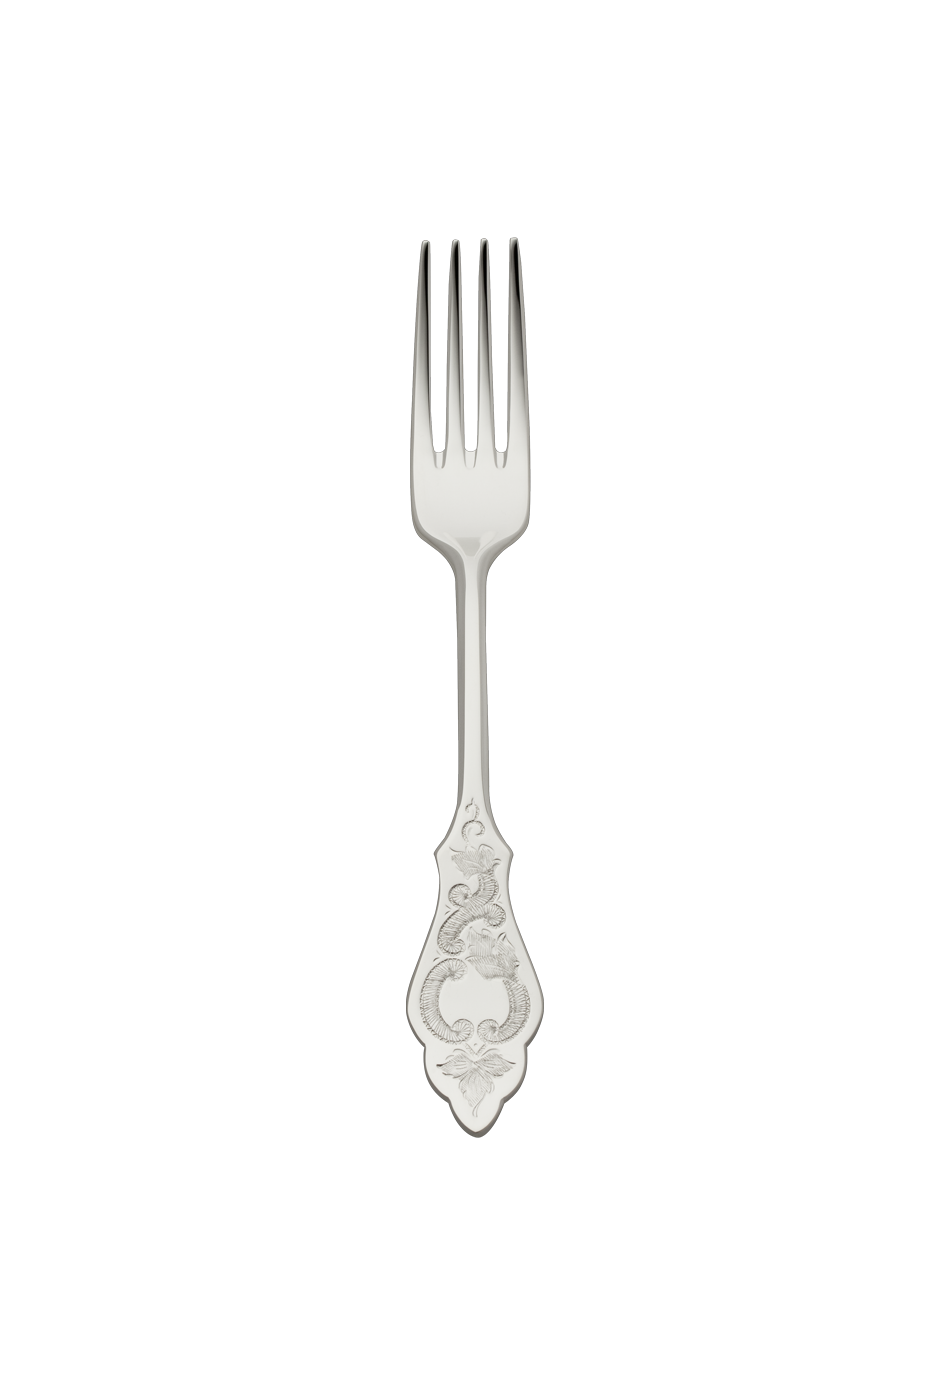 Ostfriesen Menu Fork (150g massive silverplated)